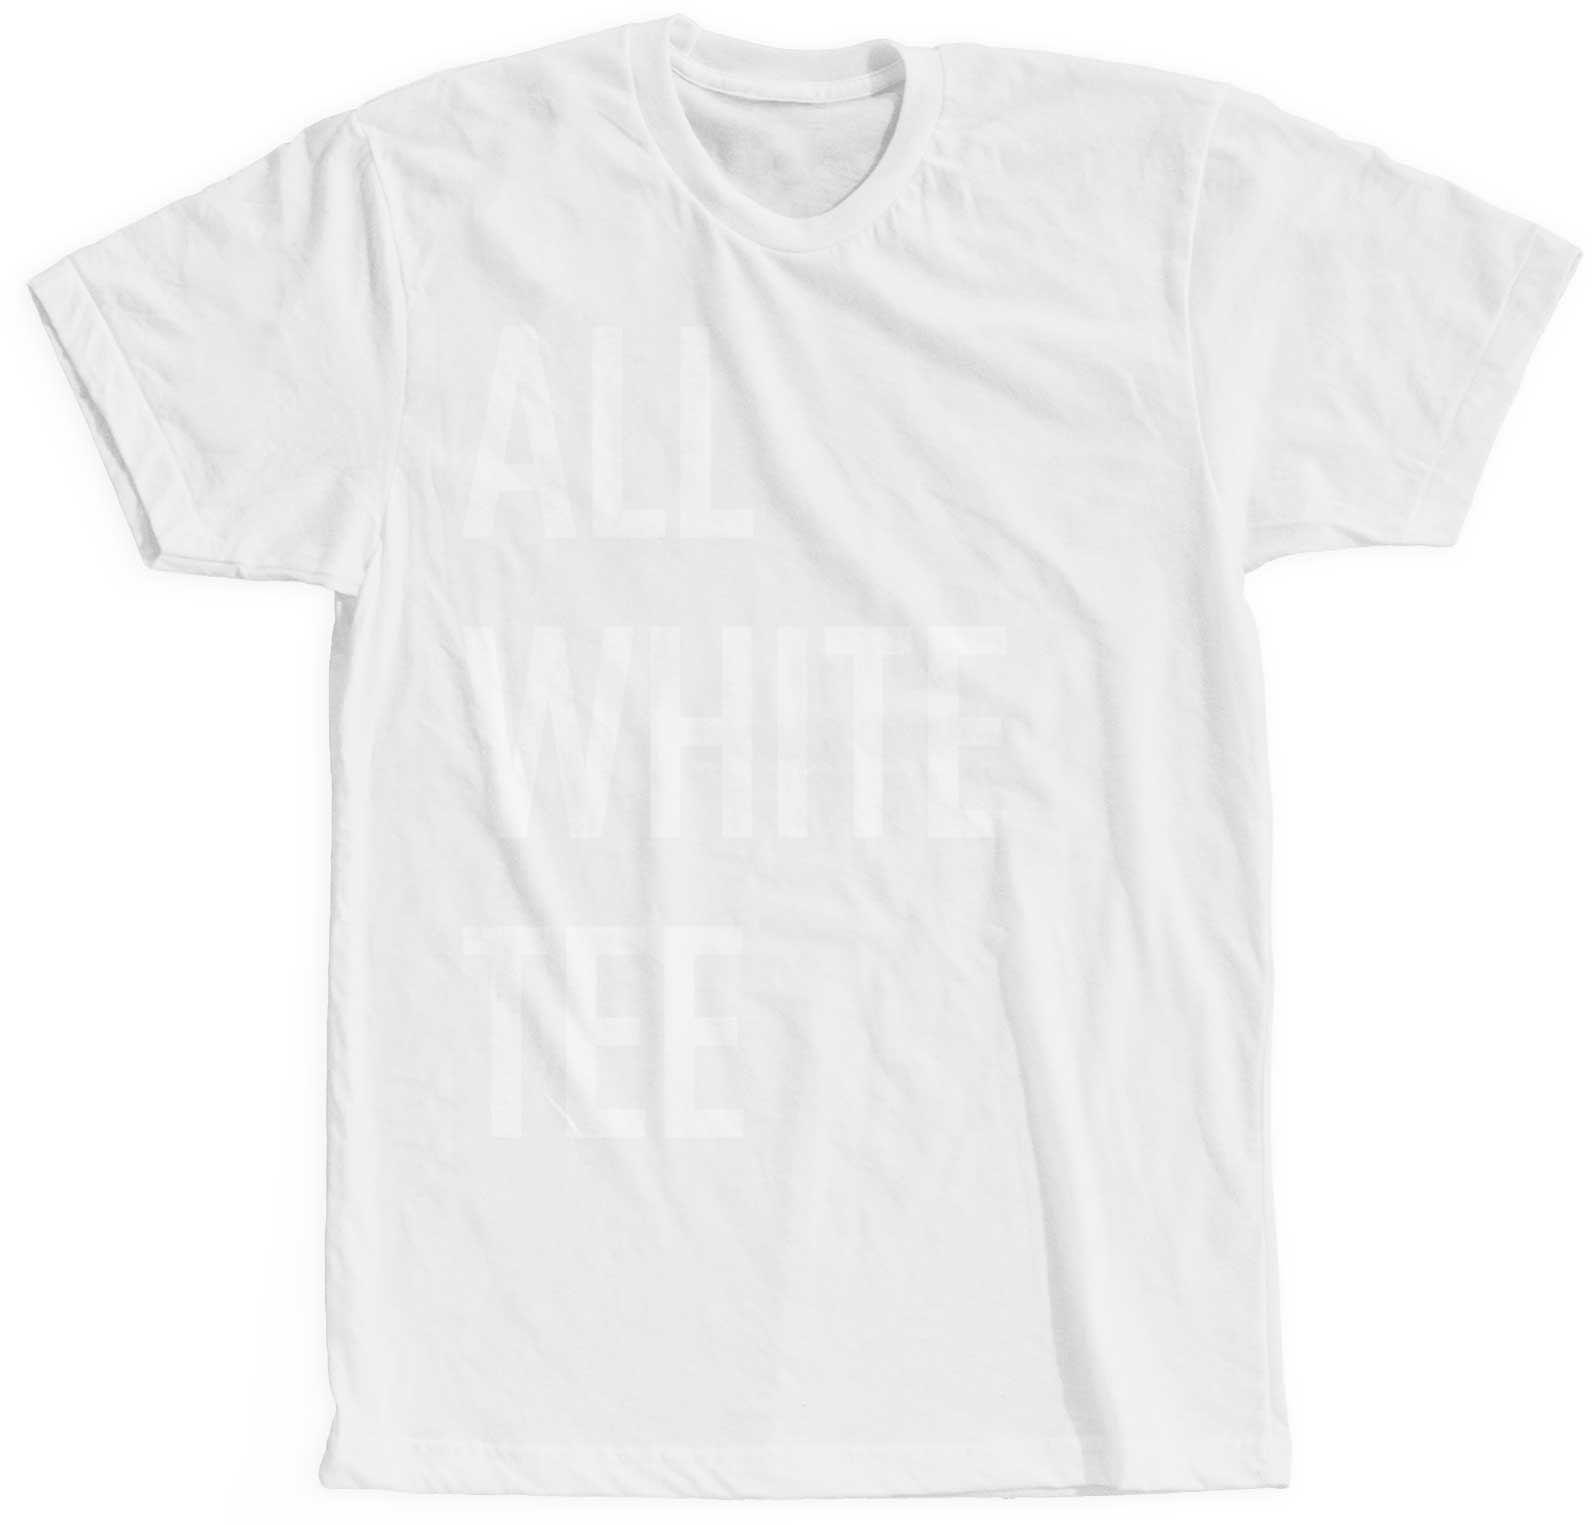 all-white-tee